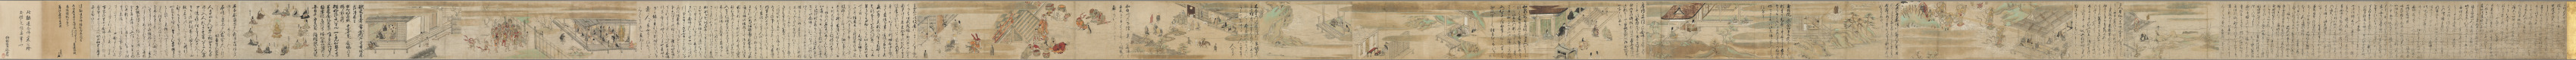 The Illustrated Miraculous Origins of the Yūzū Nenbutsu School